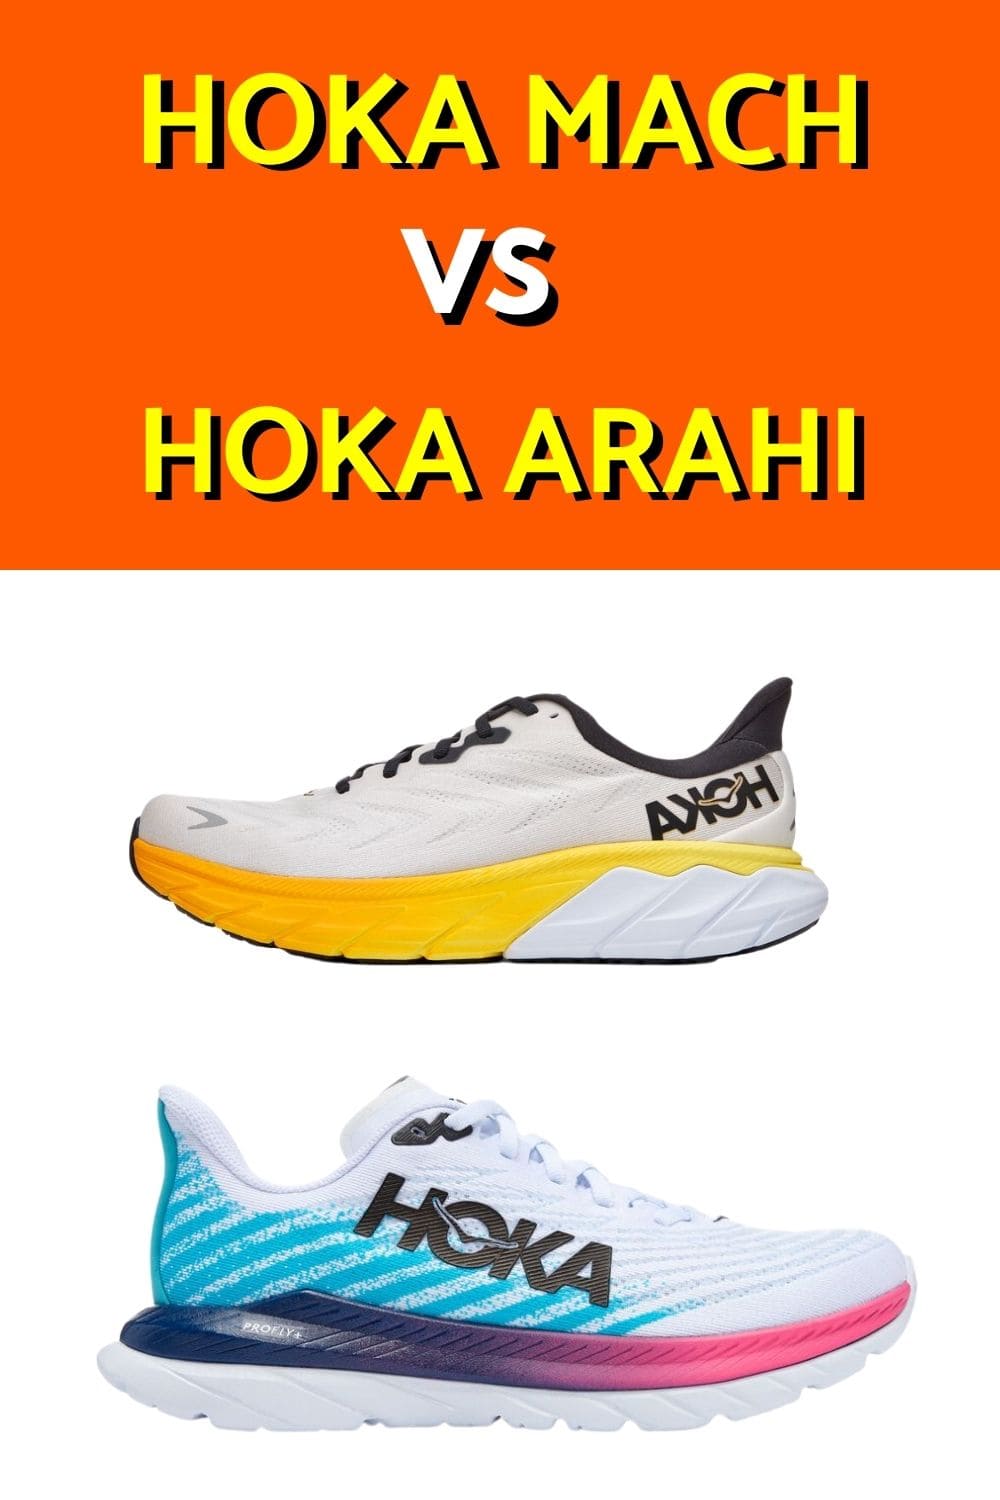 Difference between Hoka Mach and Hoka Arahi - Full comparison